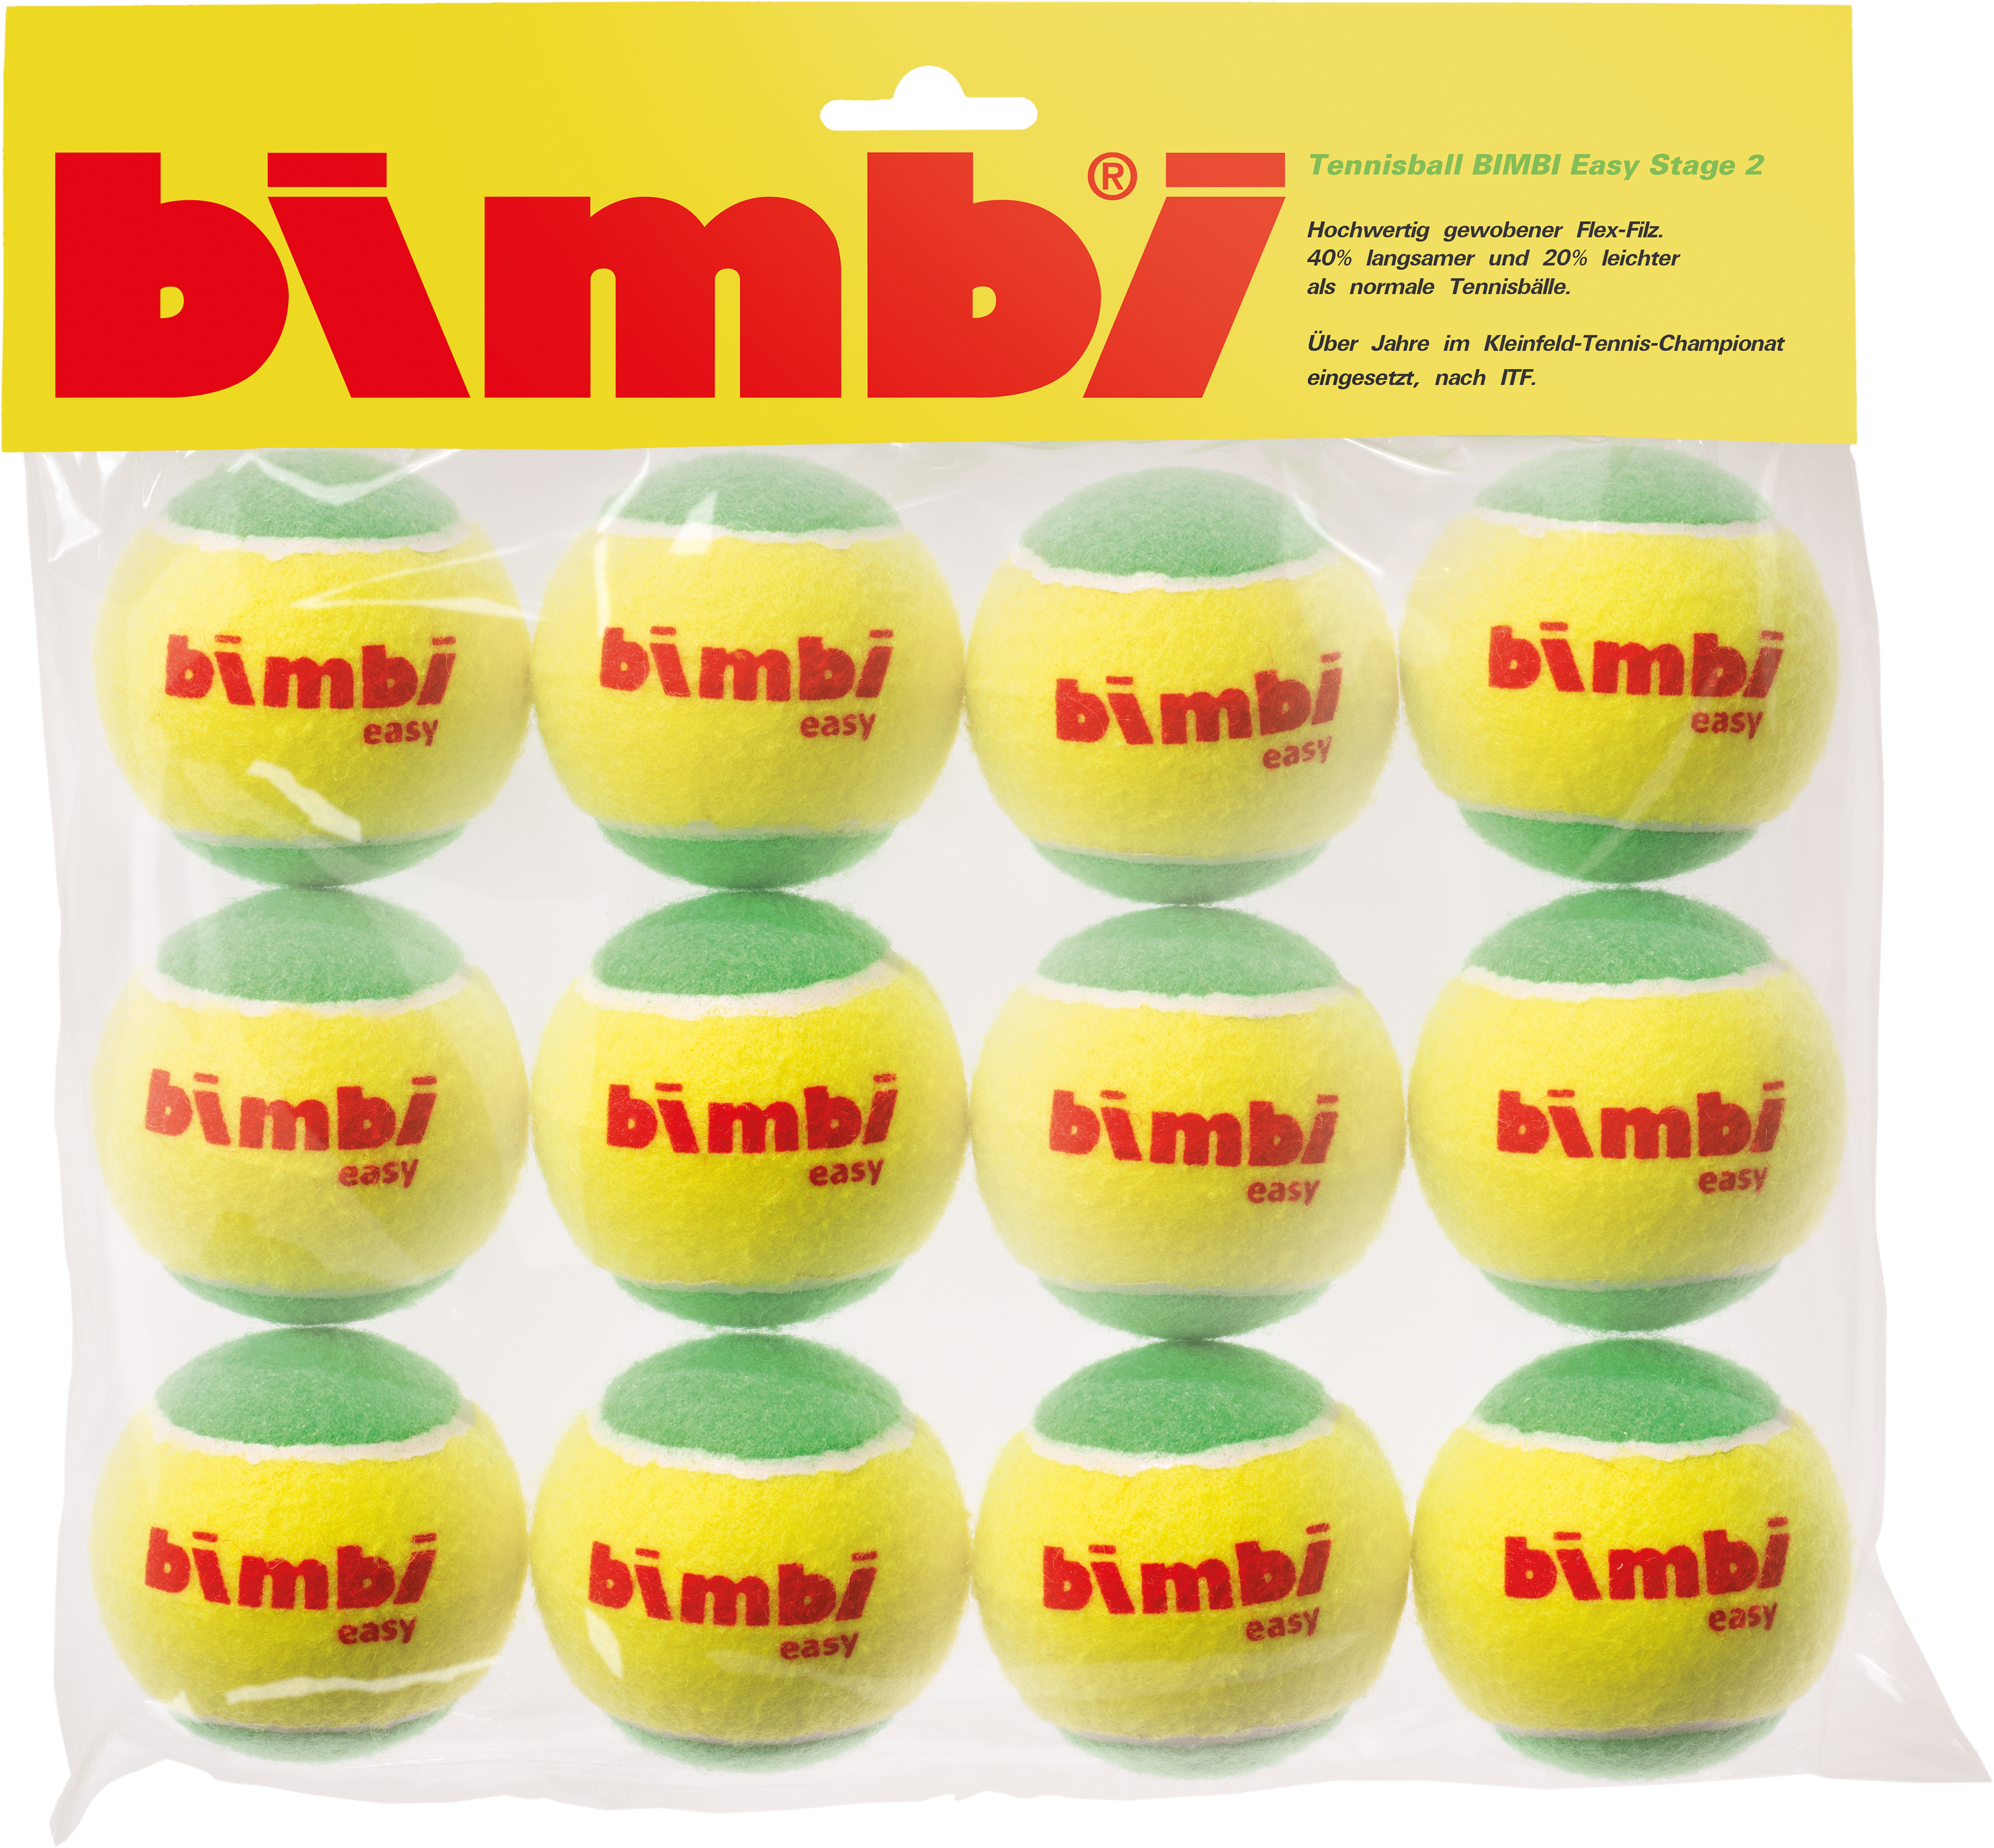 Tennisball BIMBI Easy Stage 2 -pack of 12